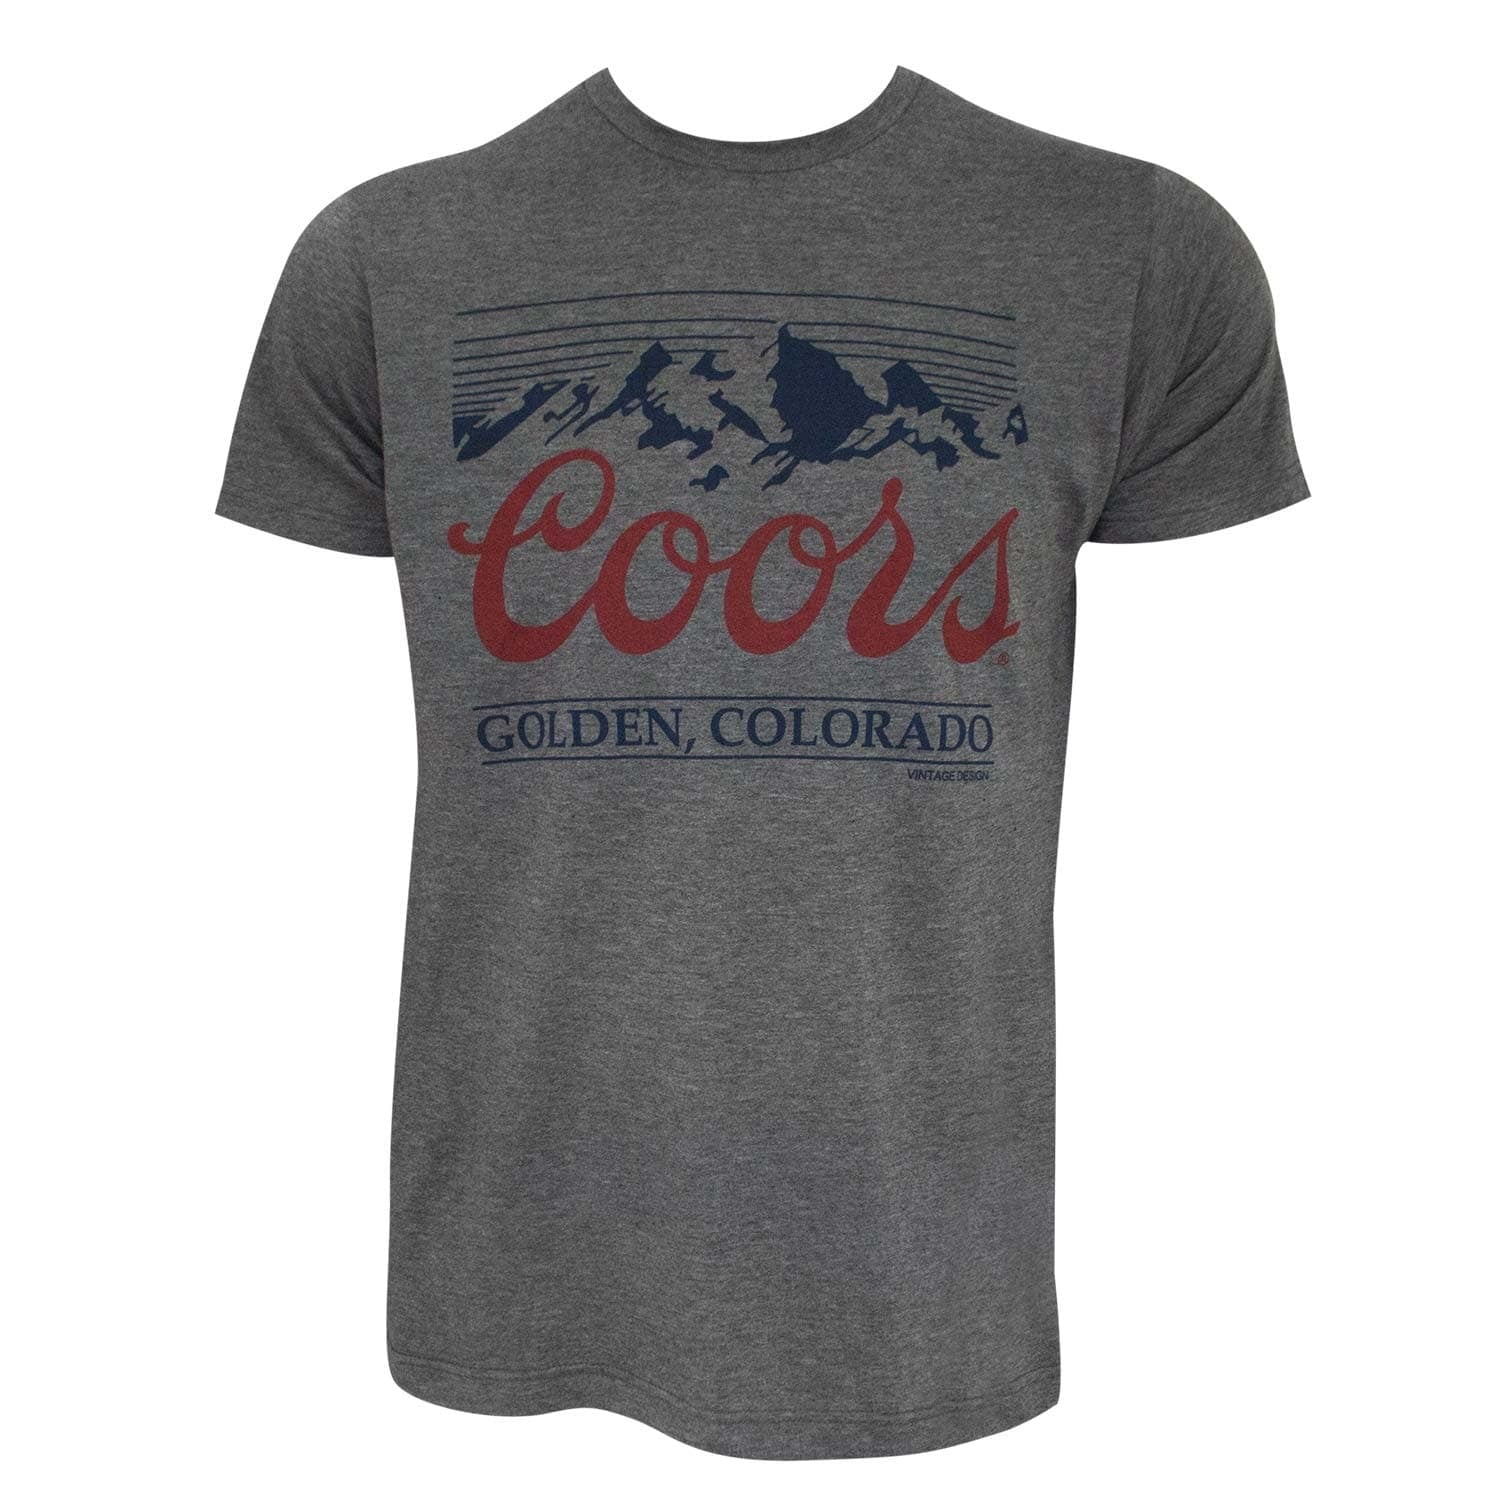 Coors - Coors Men's Grey Golden Colorado T-Shirt-2XLarge - Walmart.com ...